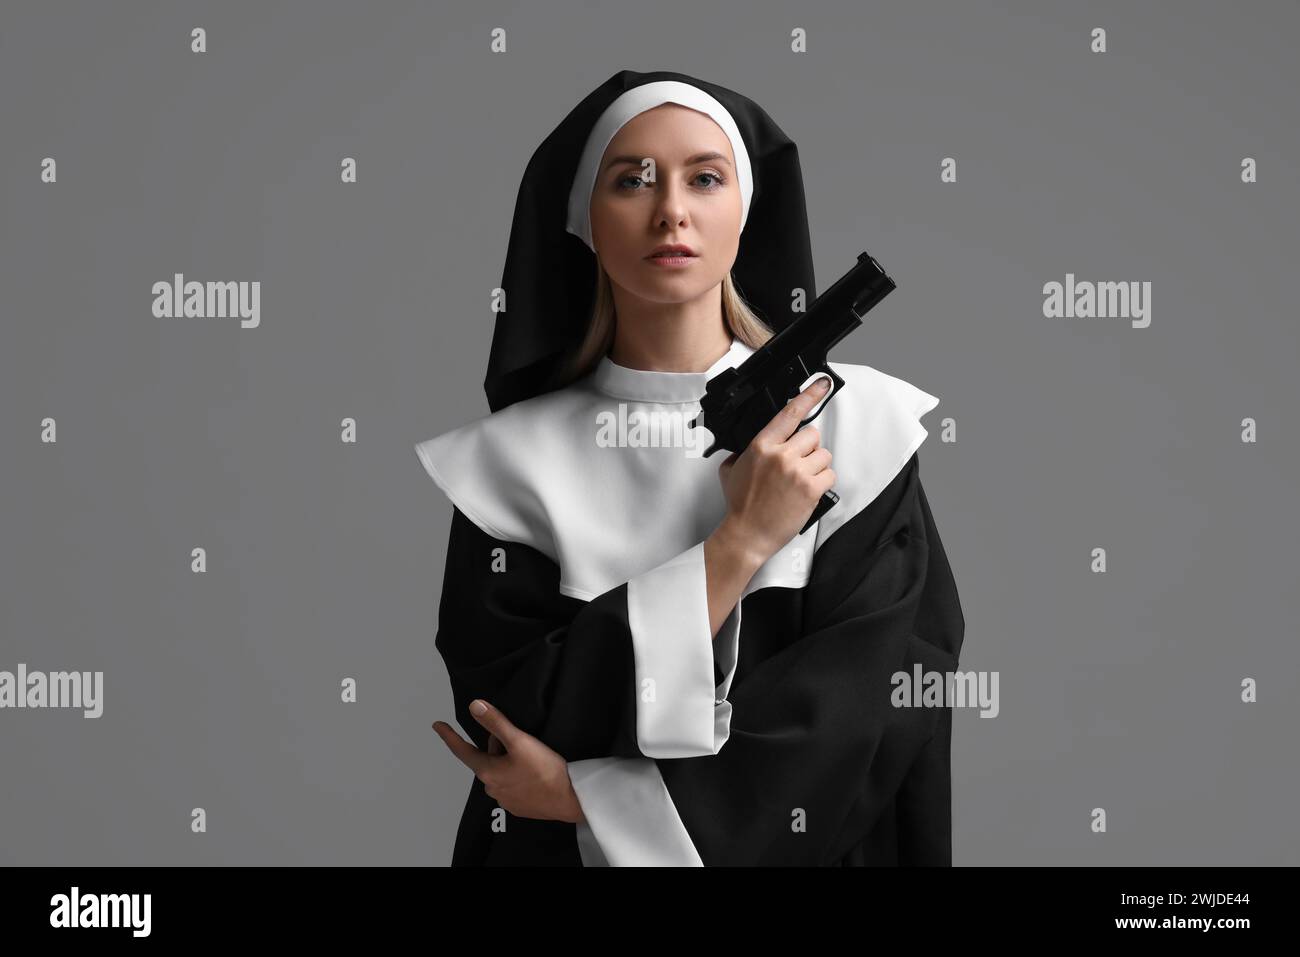 Woman in nun habit holding handgun on grey background Stock Photo